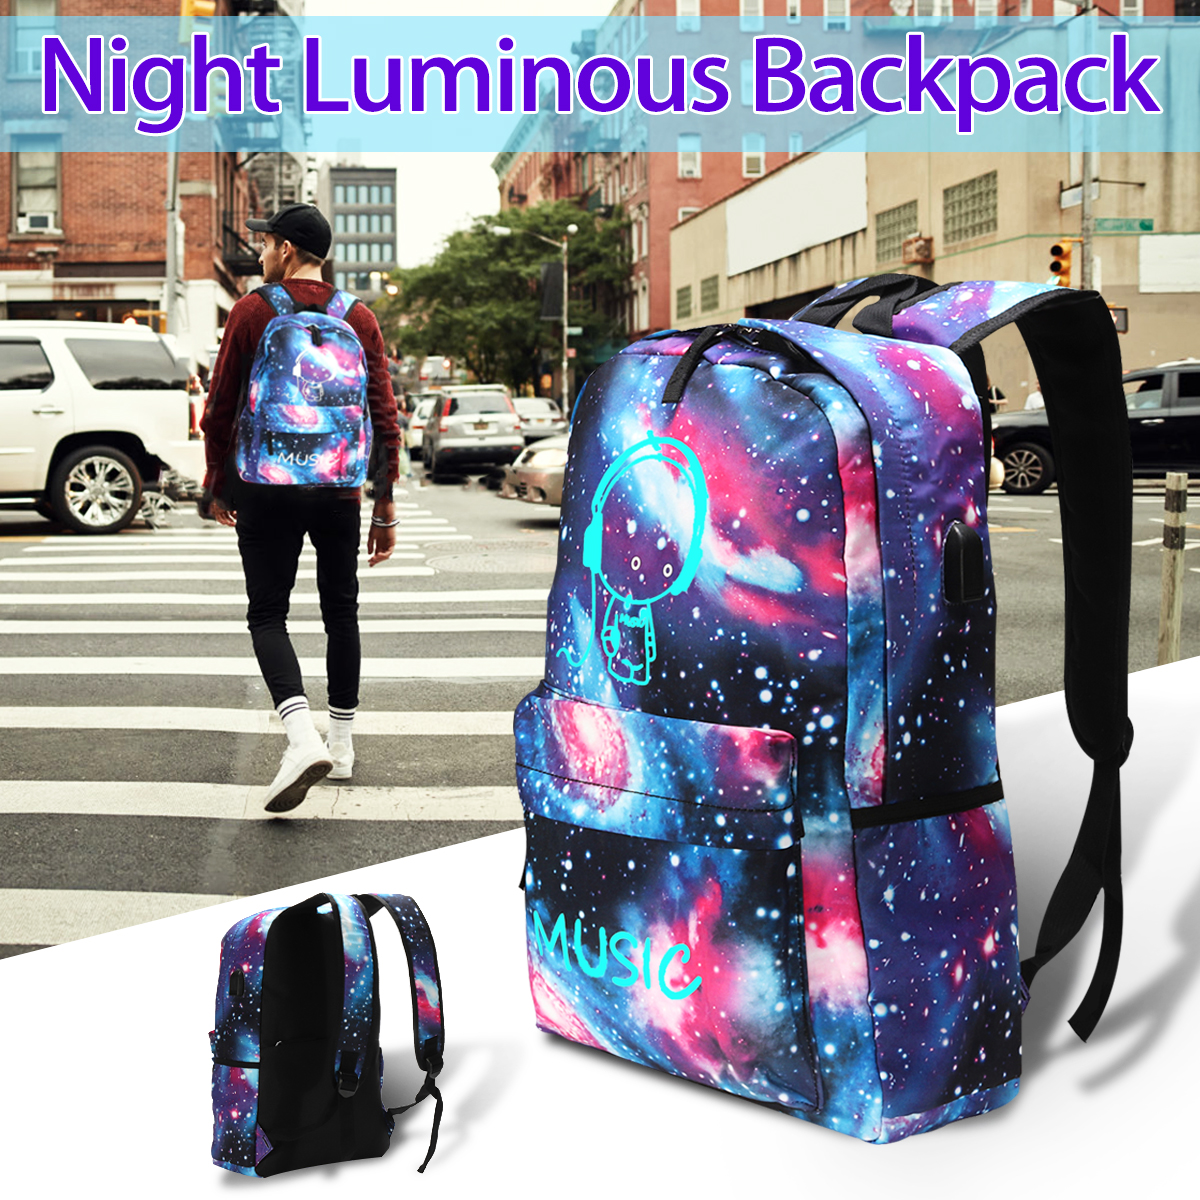 Outdoor-Night-Luminous-Backpack-USB-Oxford-School-Bag-Shoulder-Bag-Waterproof-Handbag-1373775-1